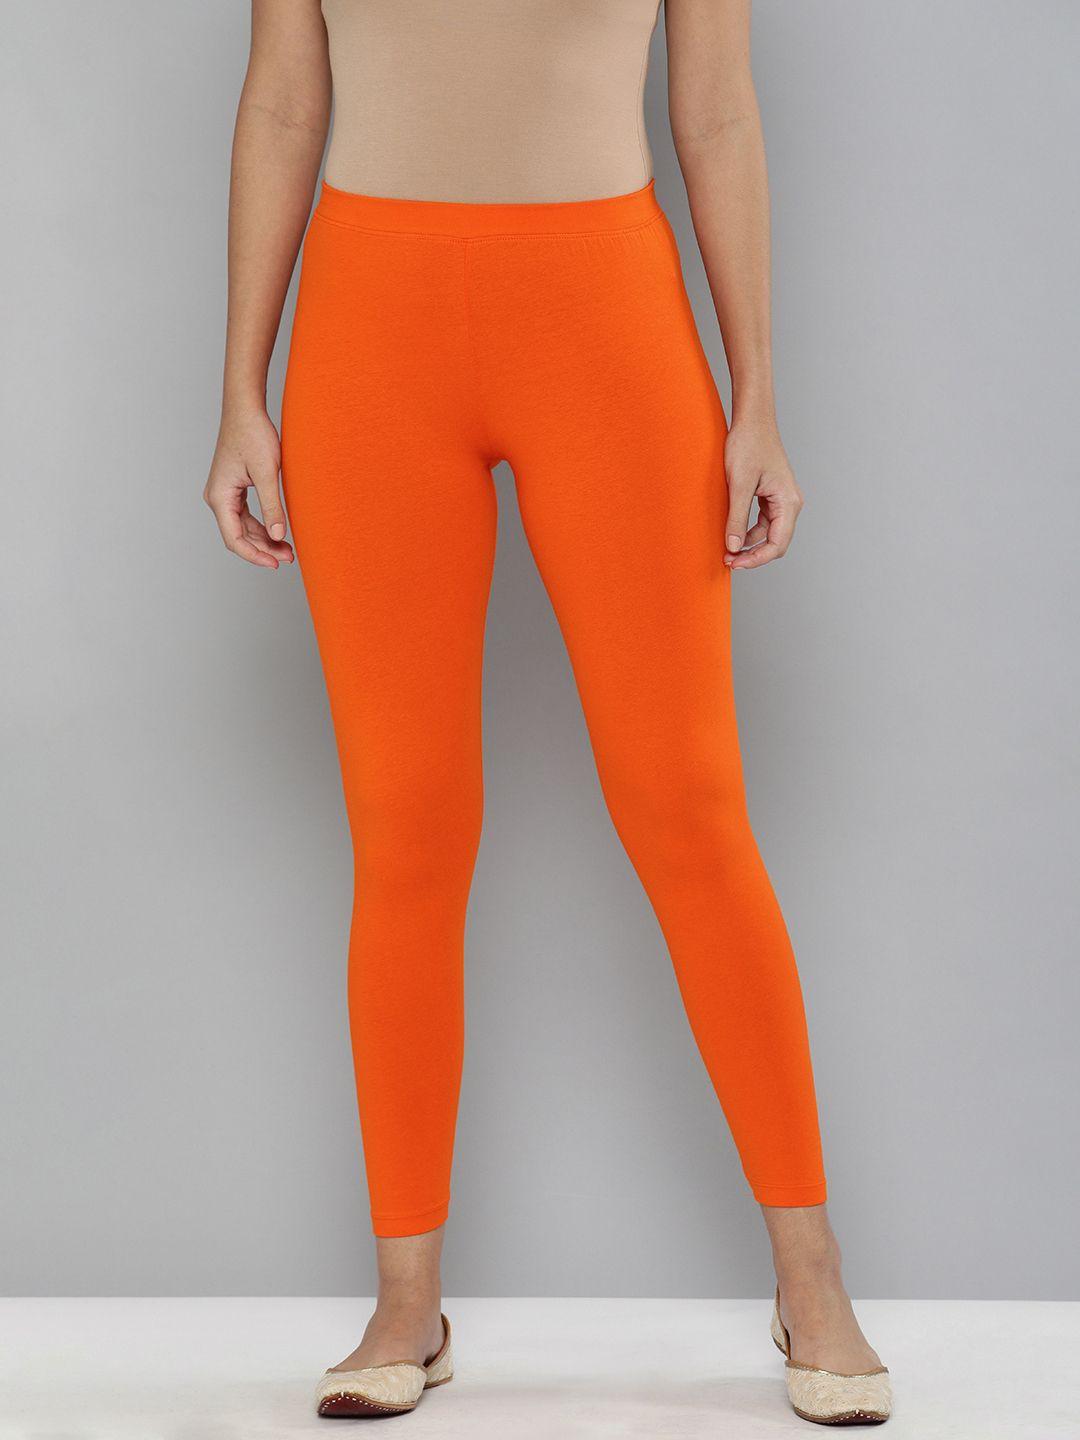 here&now women orange solid leggings